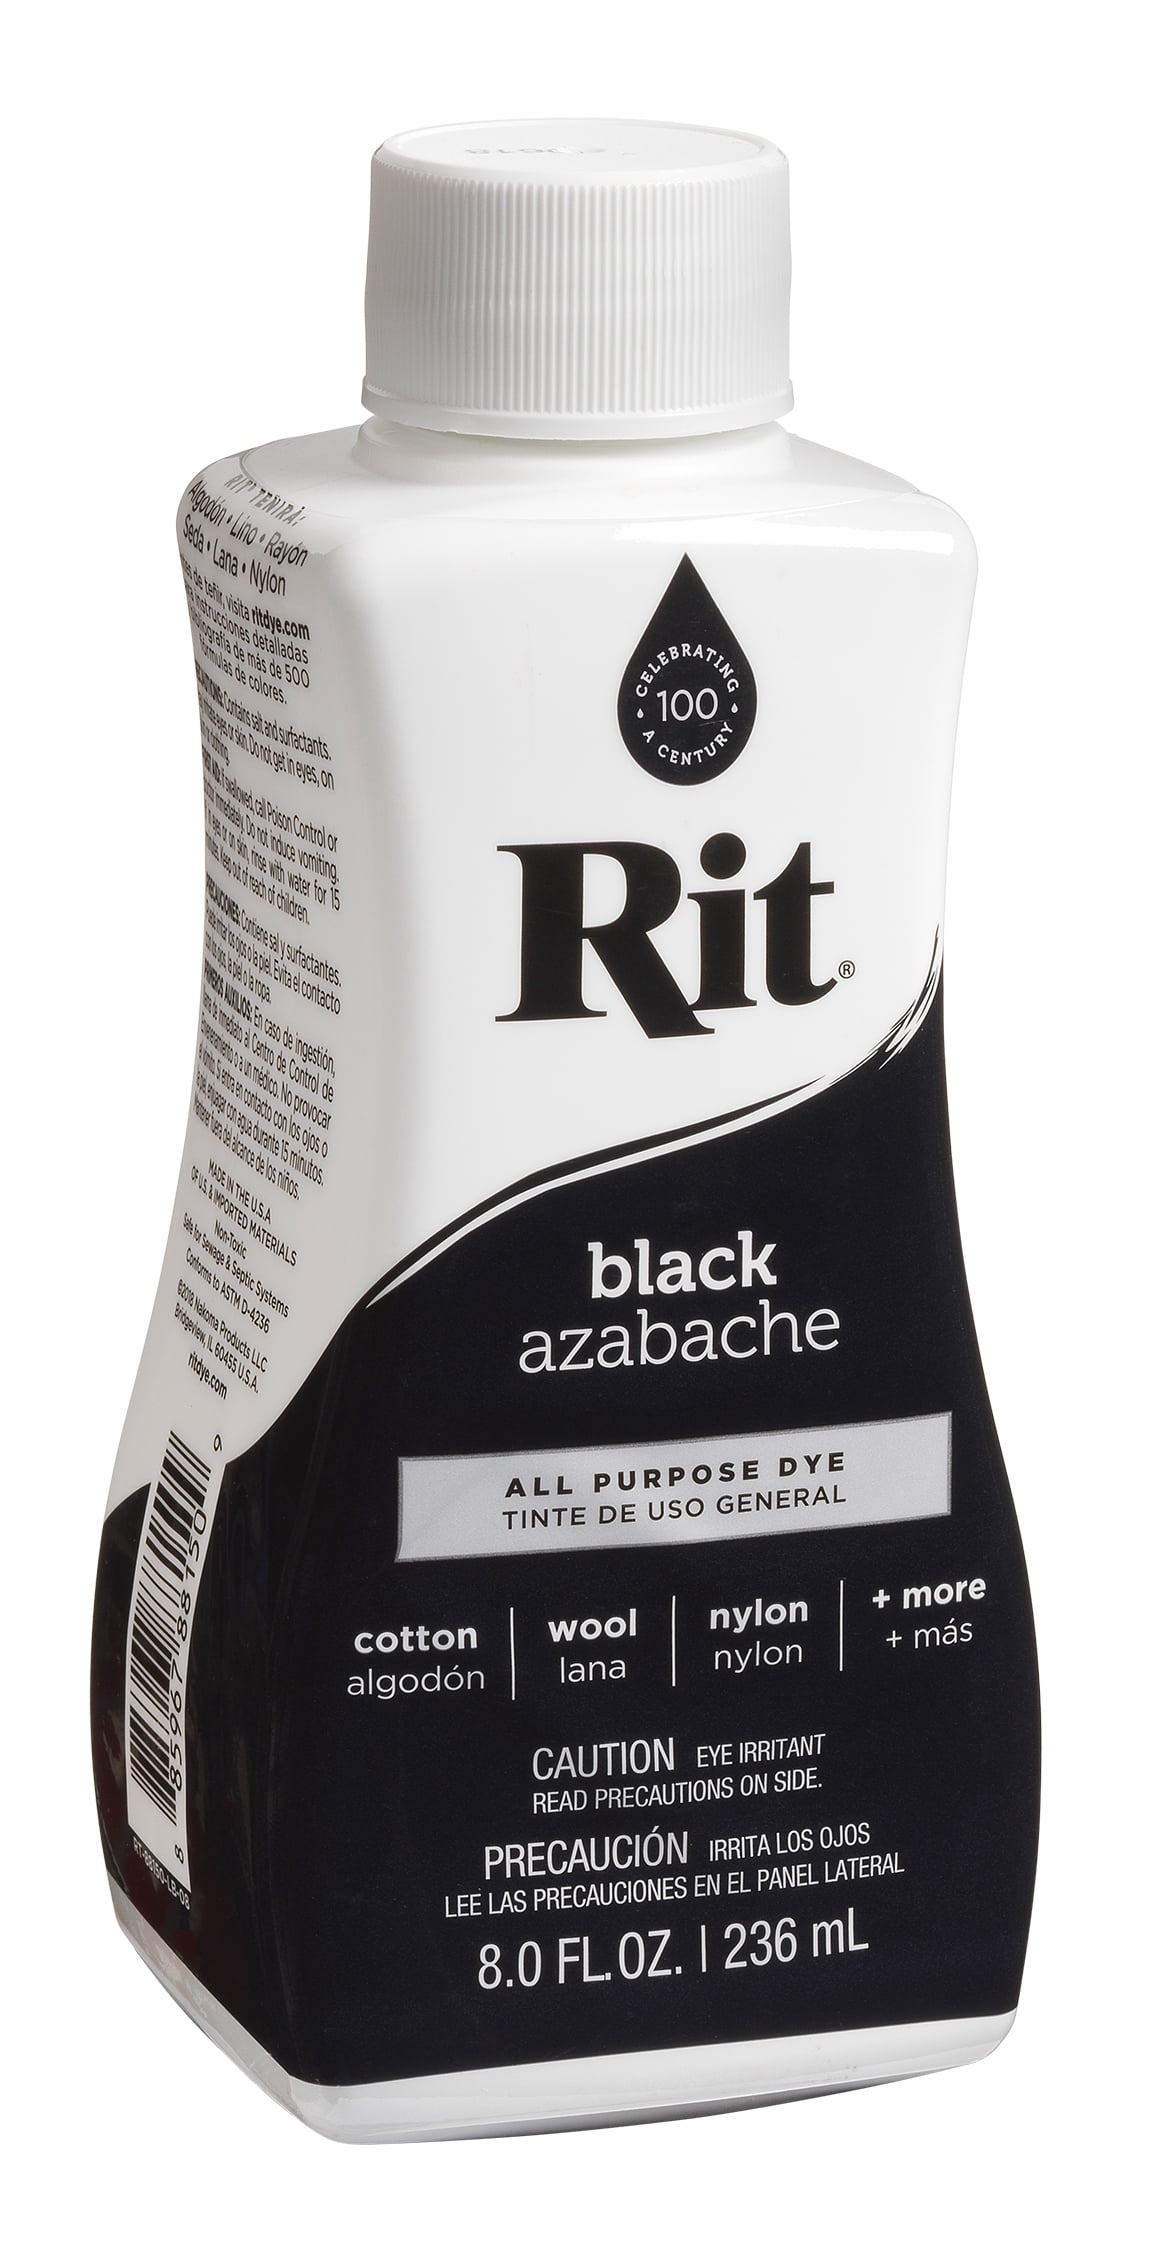 Rit Liquid Fabric Dye Black 8 Ounces, Pack of 3